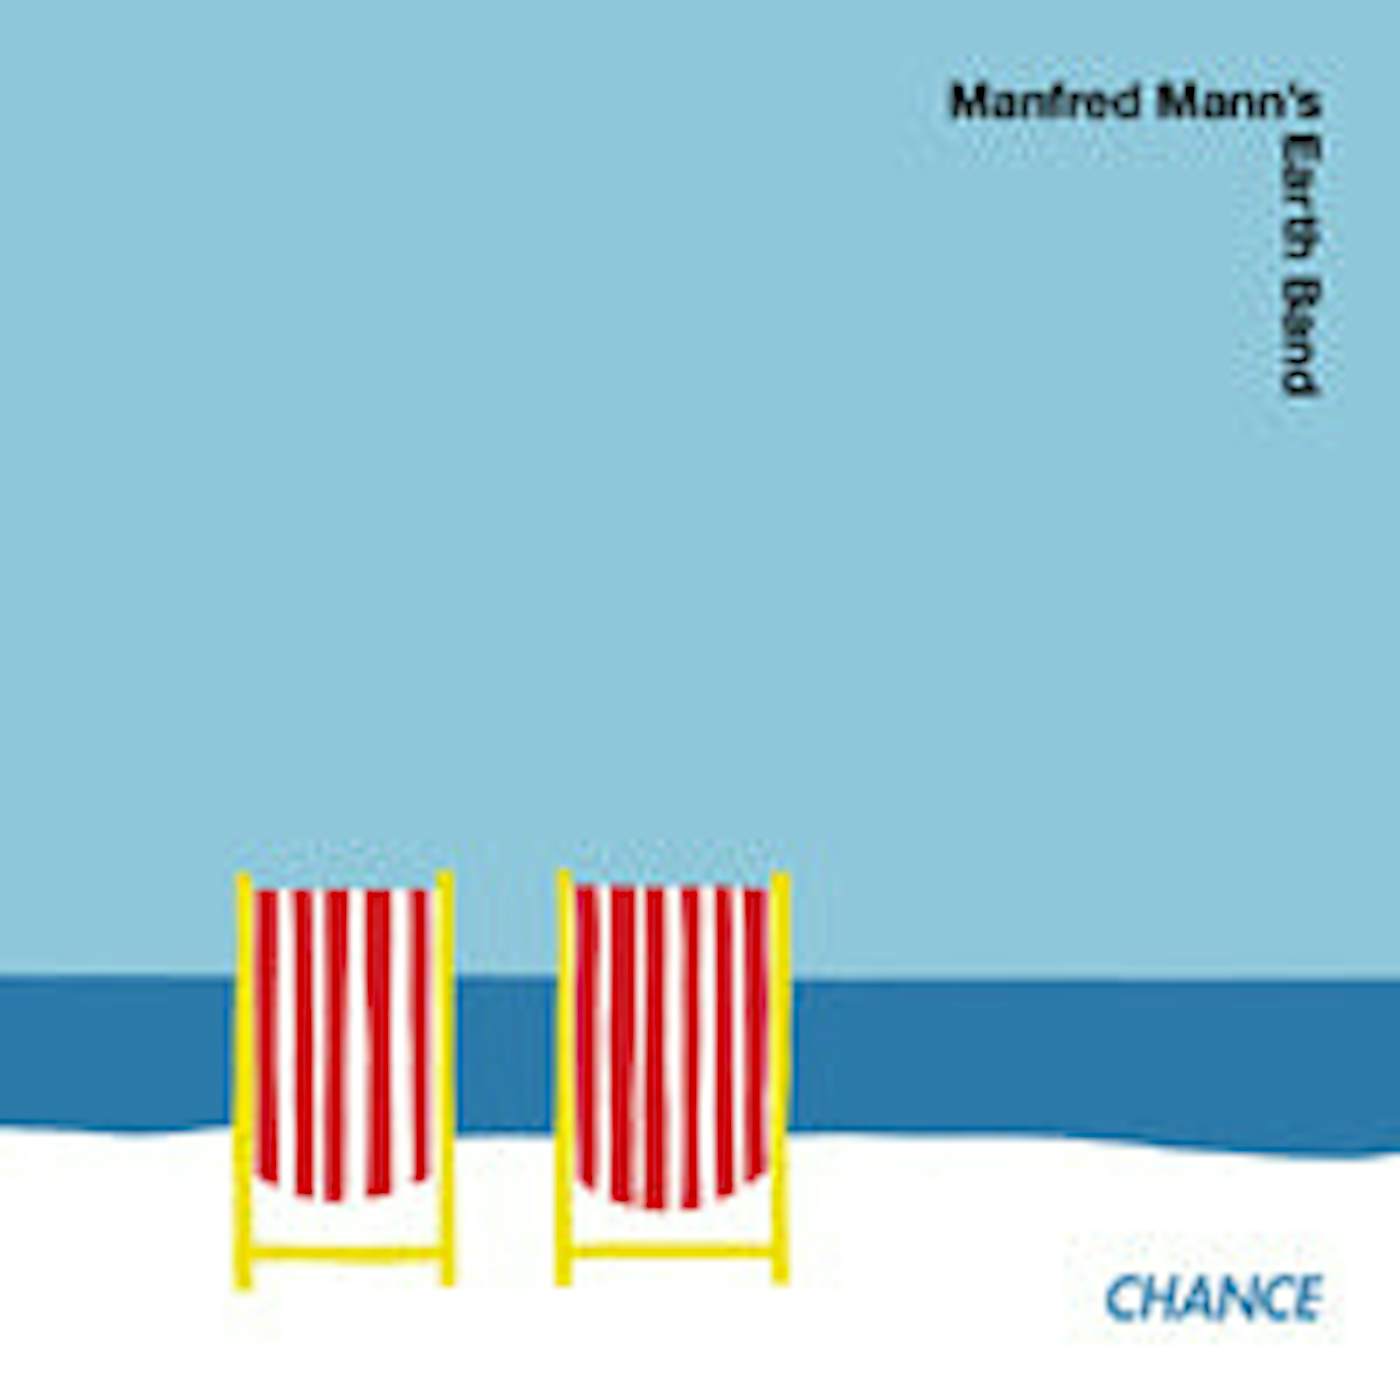 Manfred Mann'S Earth Band LP - Chance (Vinyl)